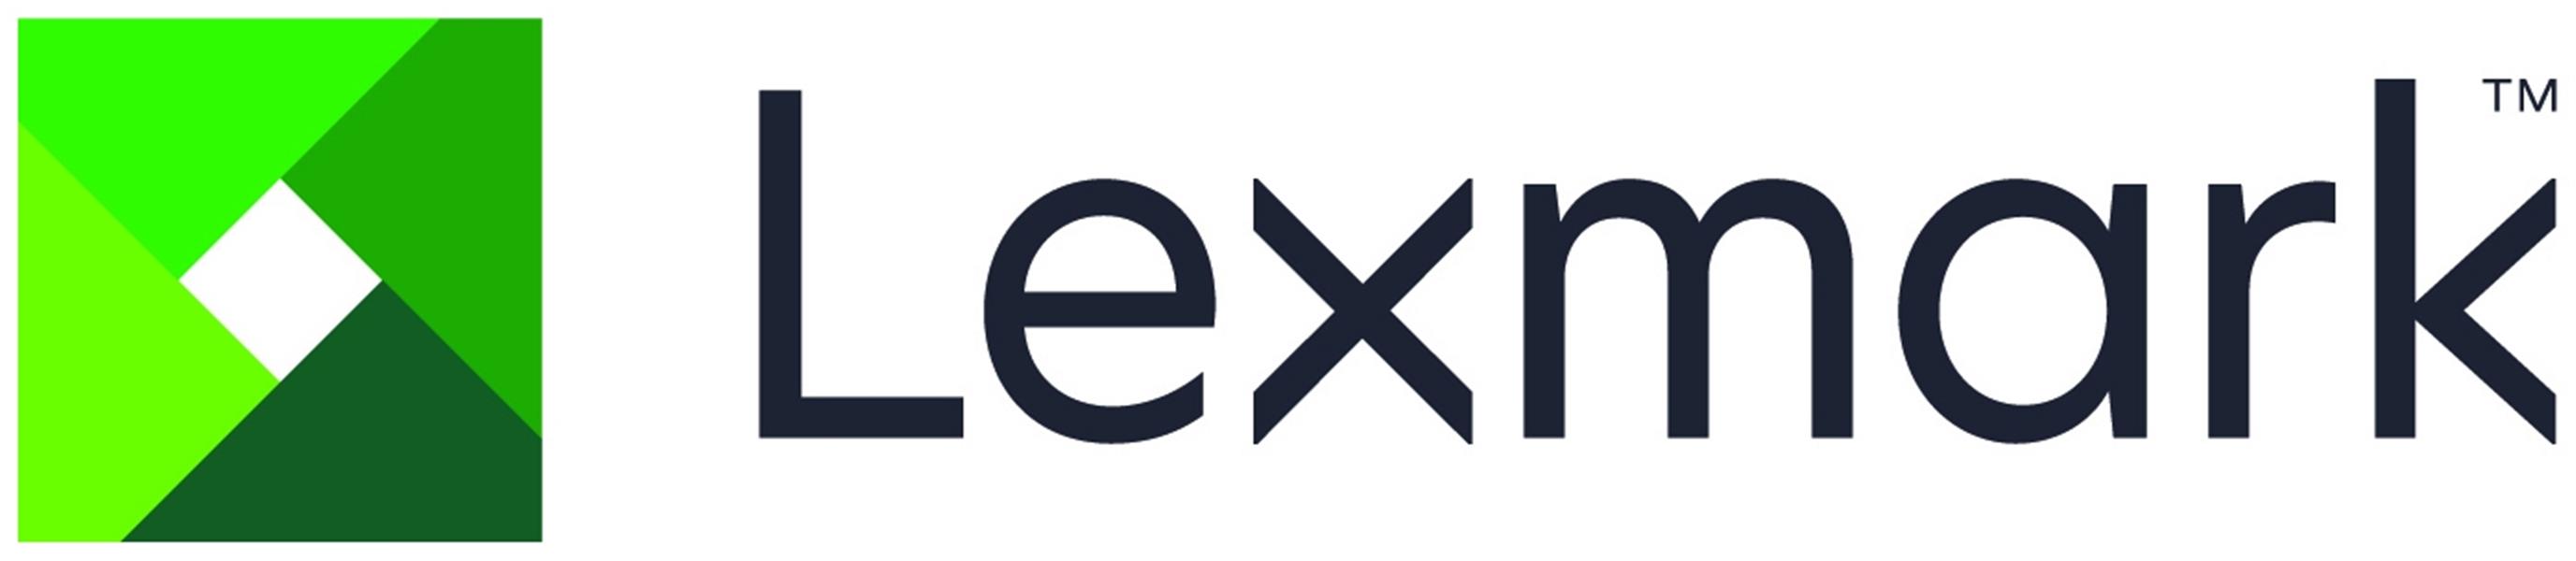 LEXMARK XC9245 Full 4yExtended Guarantee